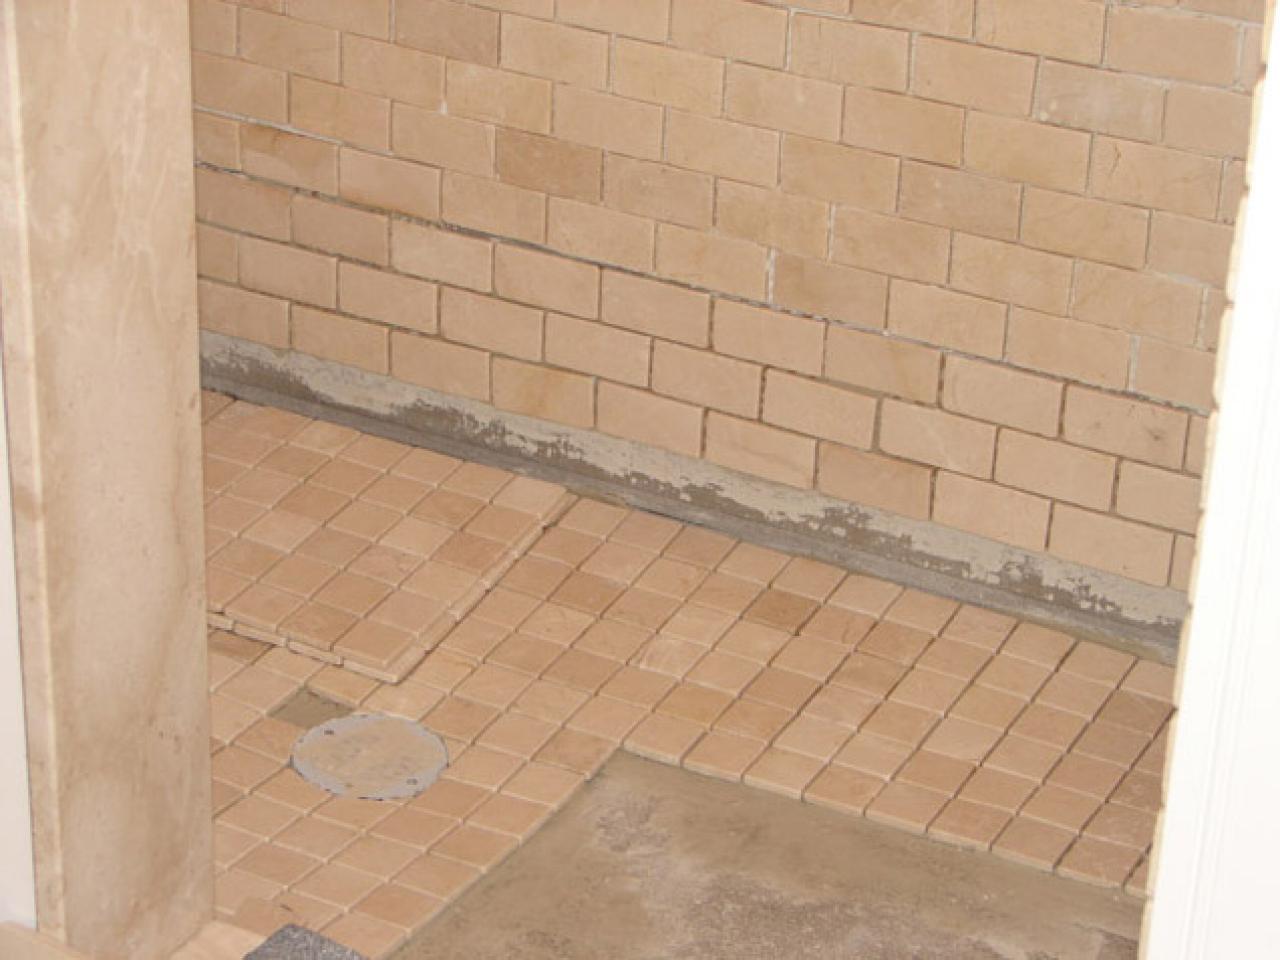 Install Tile In A Bathroom Shower, How To Install Tile Border On Floor